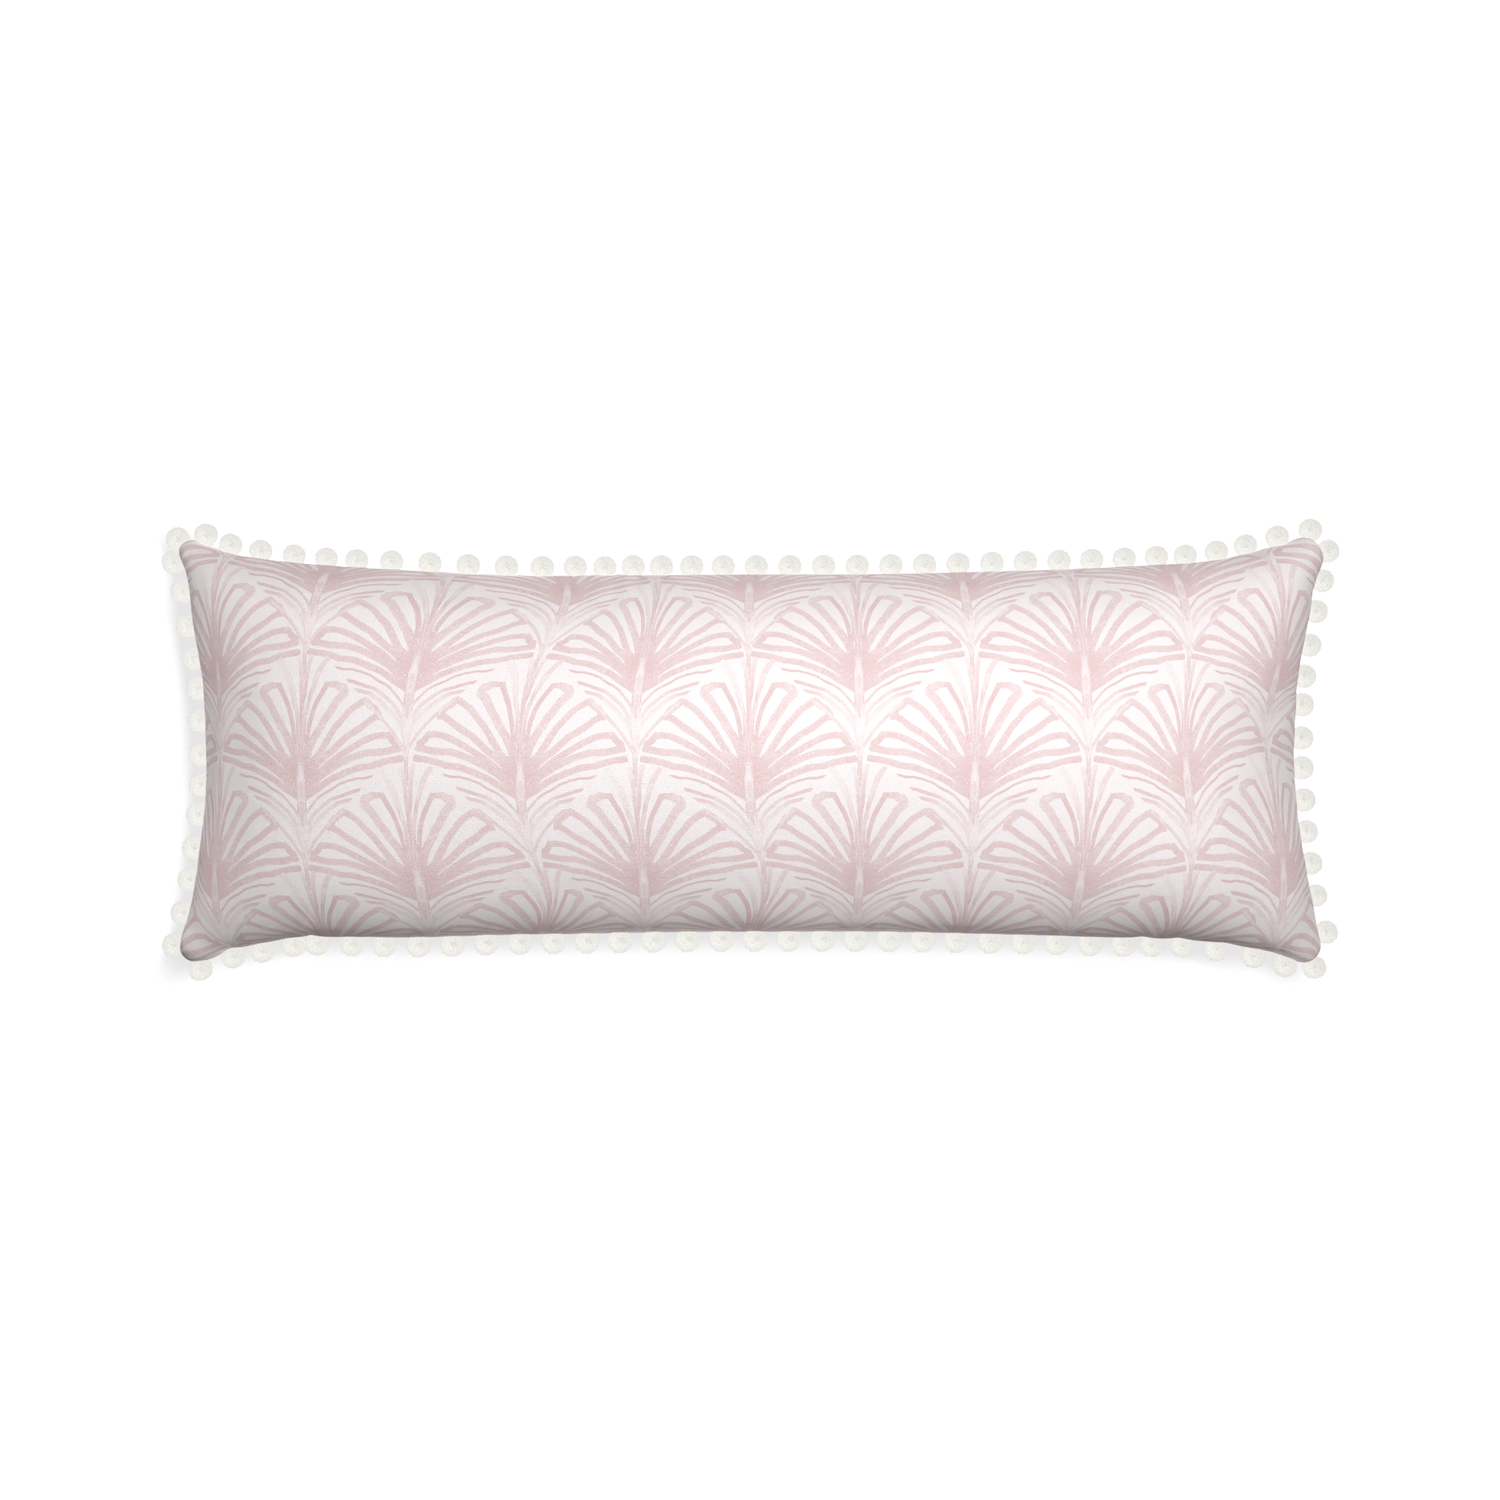 Xl-lumbar suzy rose custom pillow with snow pom pom on white background